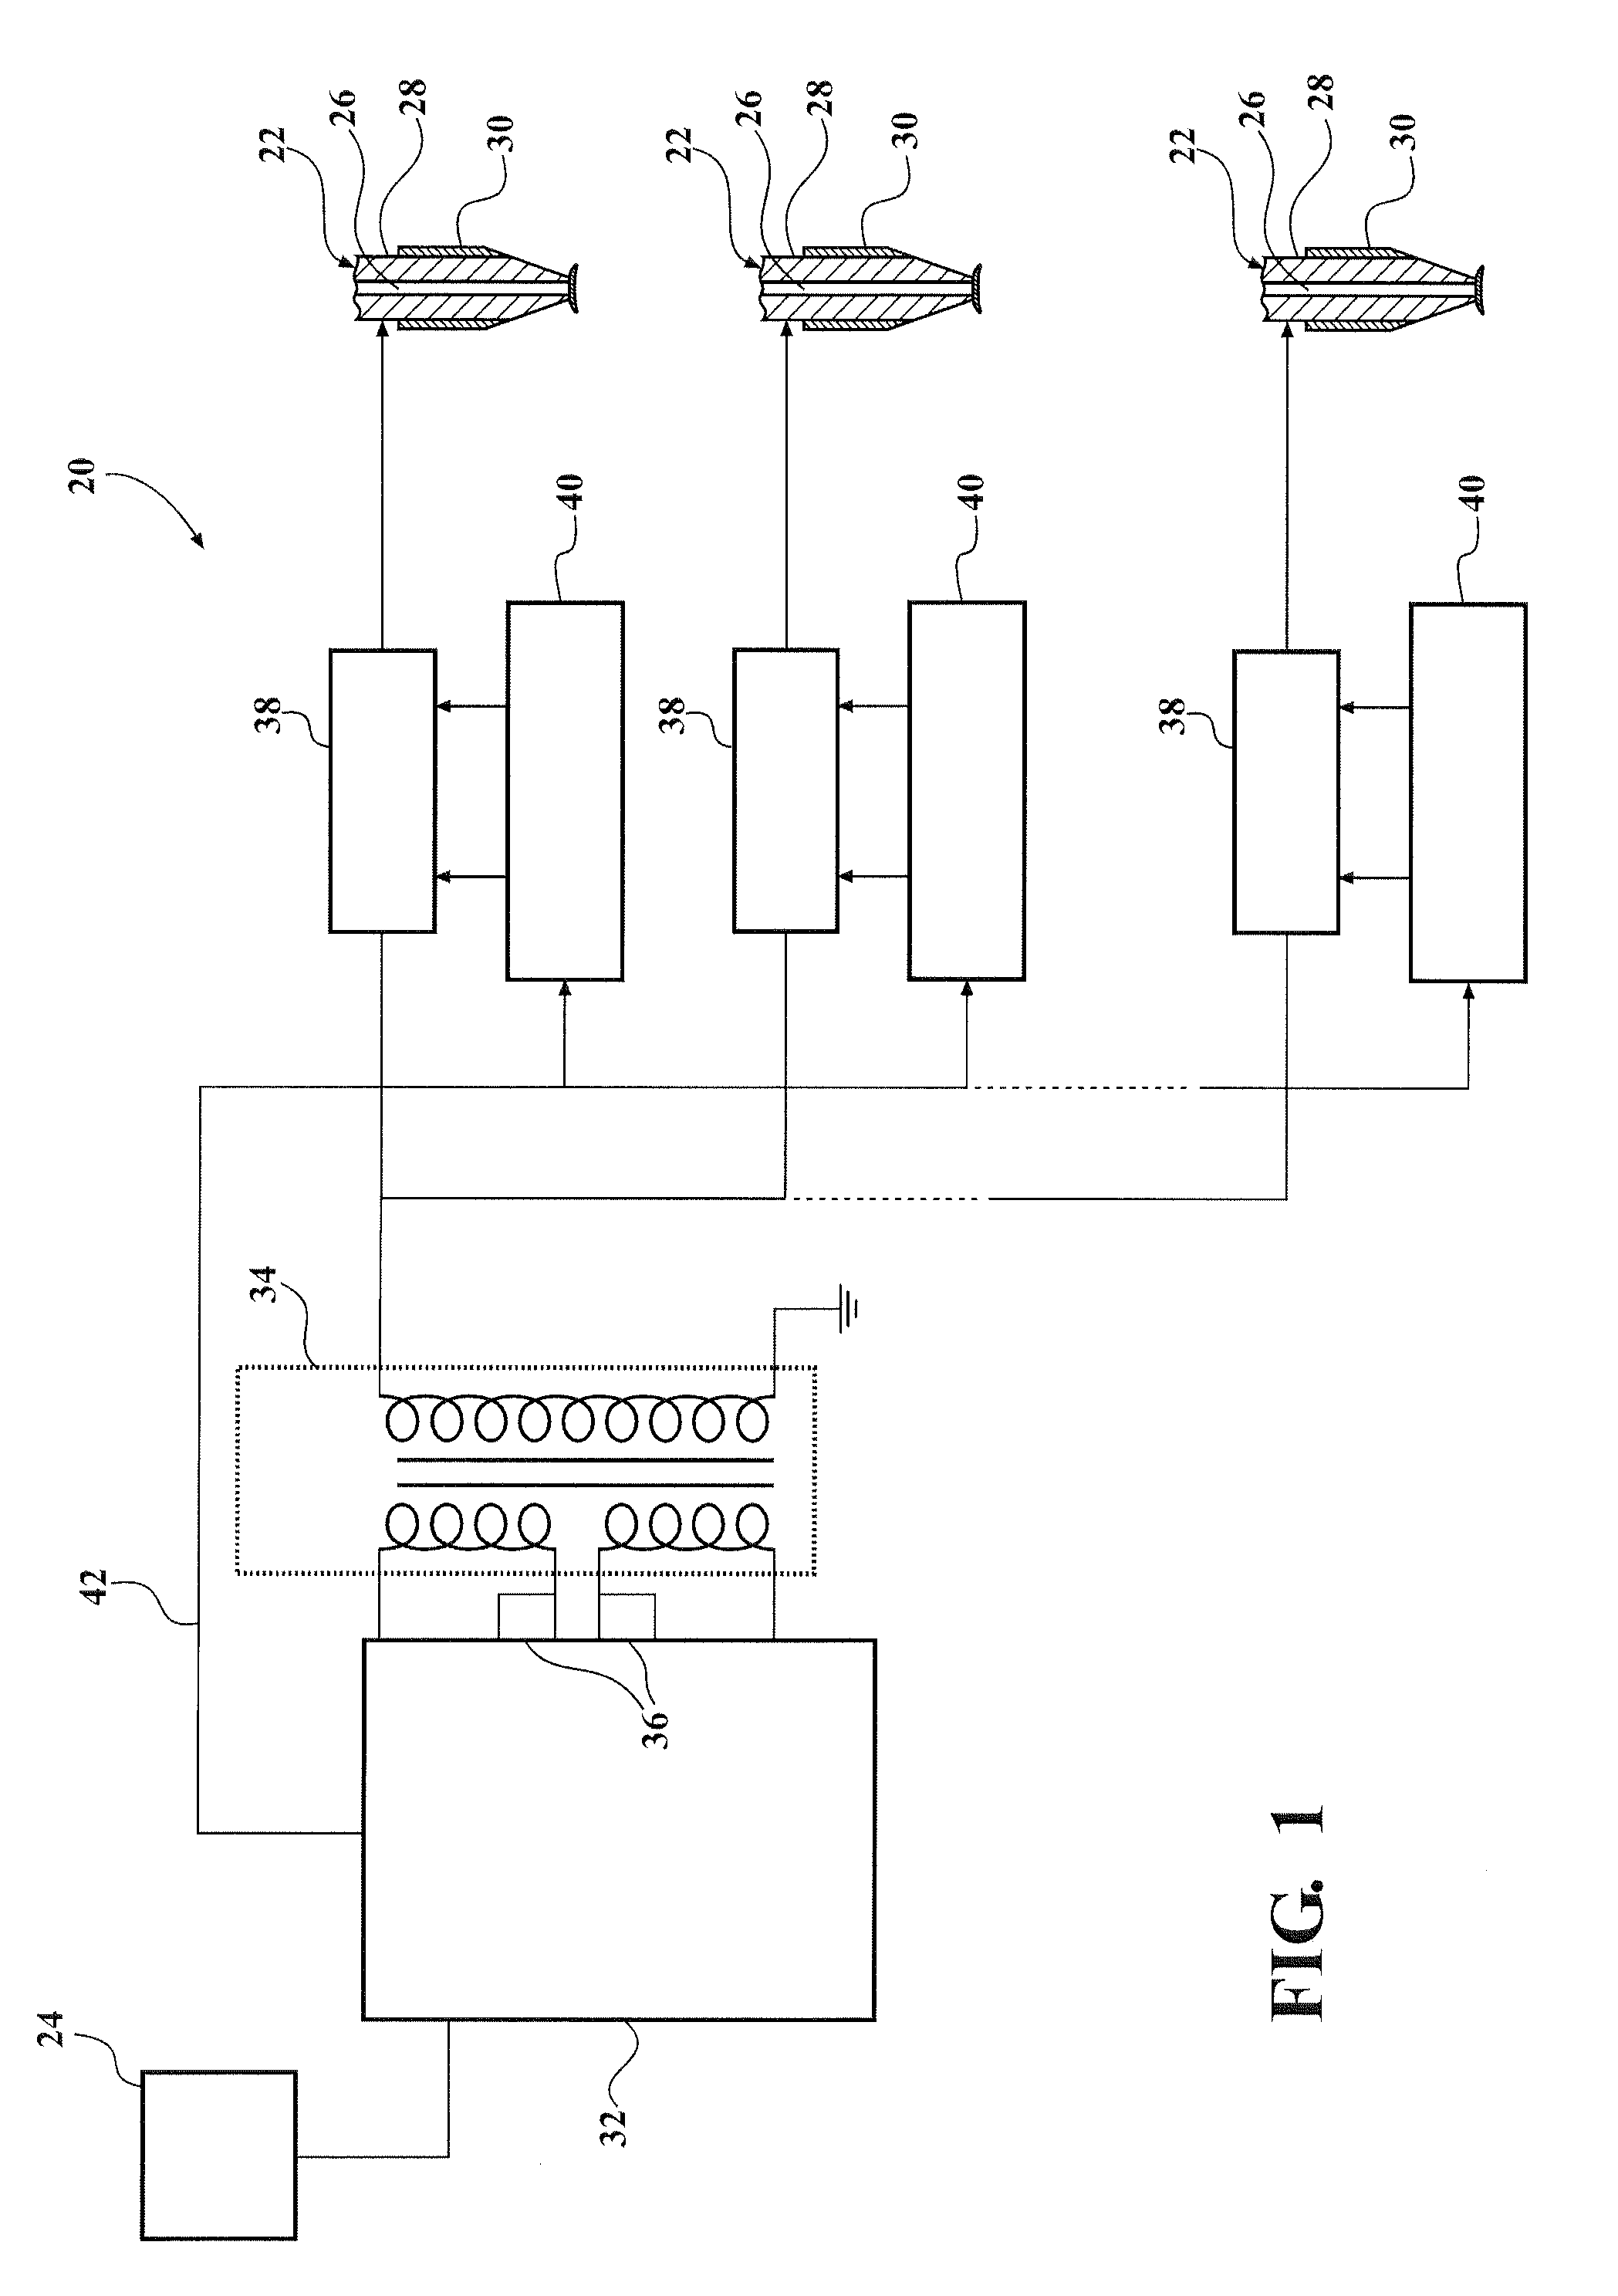 Distribution of corona igniter power signal